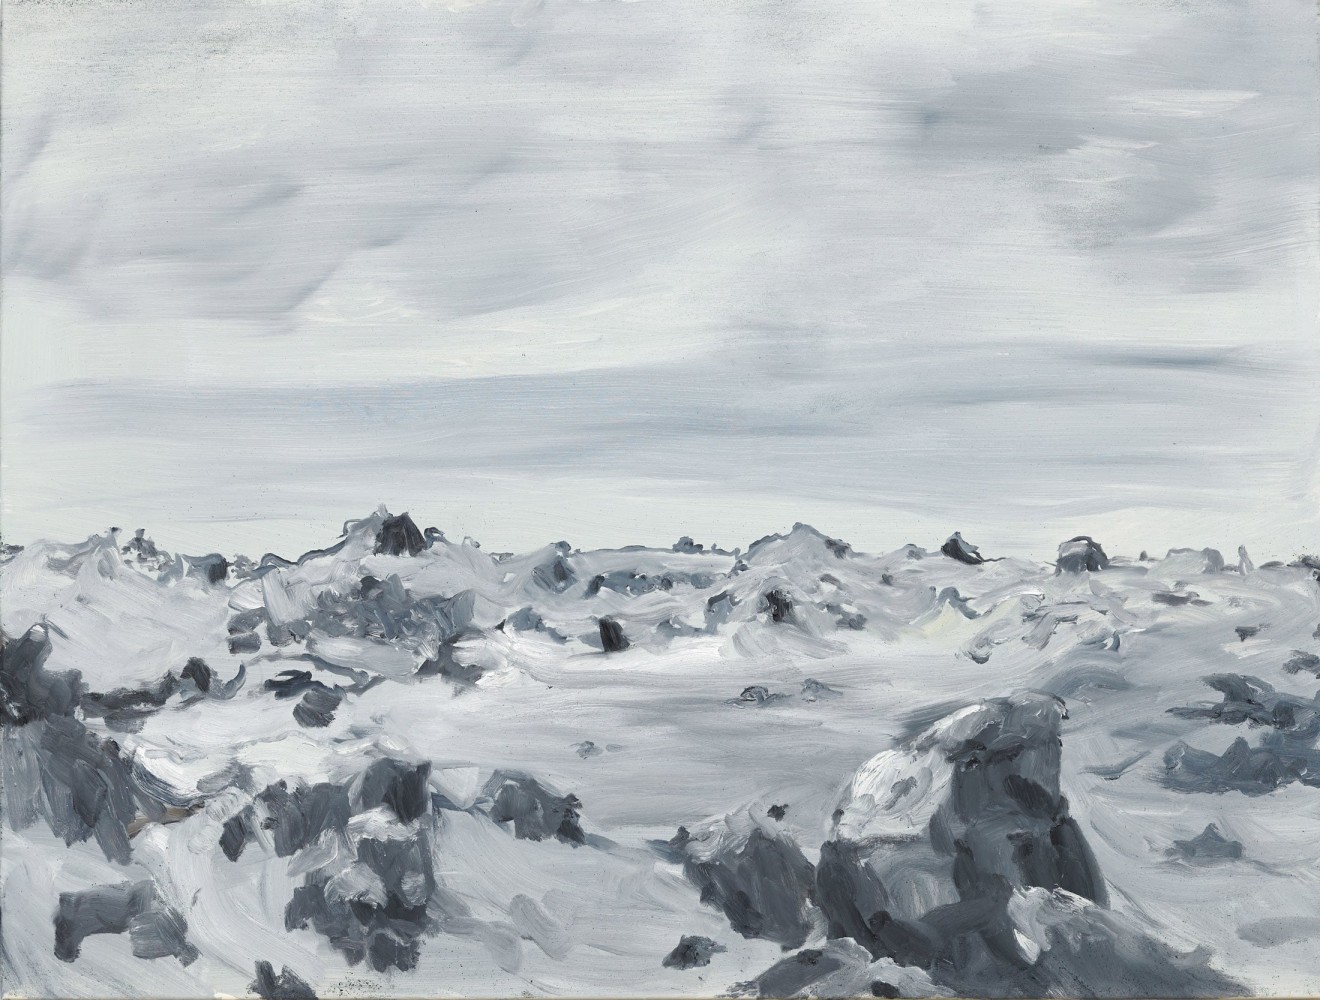 Ragnar Kjartansson
Eldhraun, 2019
Oil on canvas
31 1/2 x 41 3/8 inches
(80 x 105 cm)